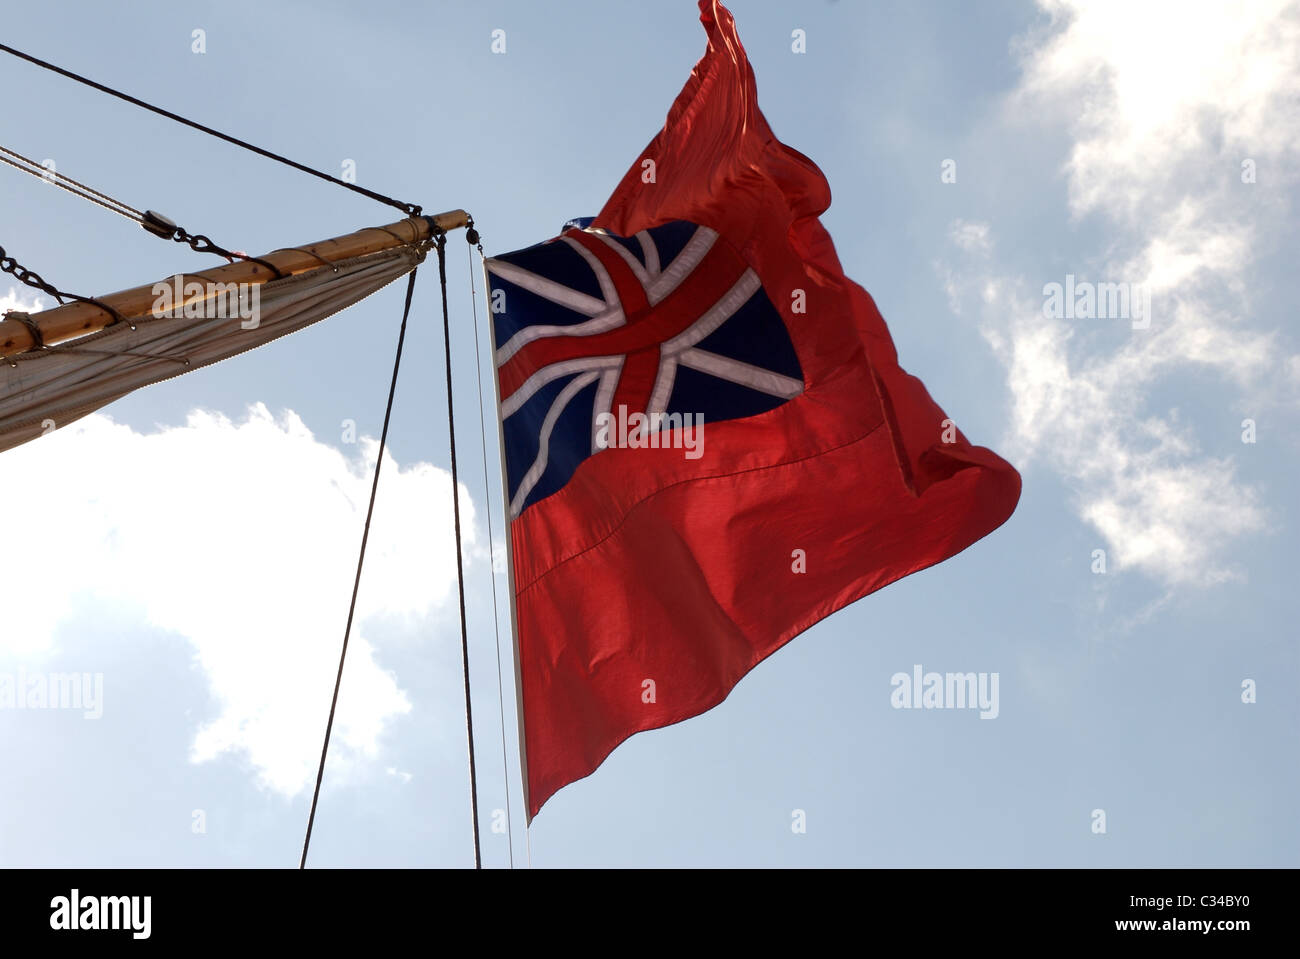 British ensign flag on ship, Brest 2008 Maritime Festival, Brittany, France Stock Photo